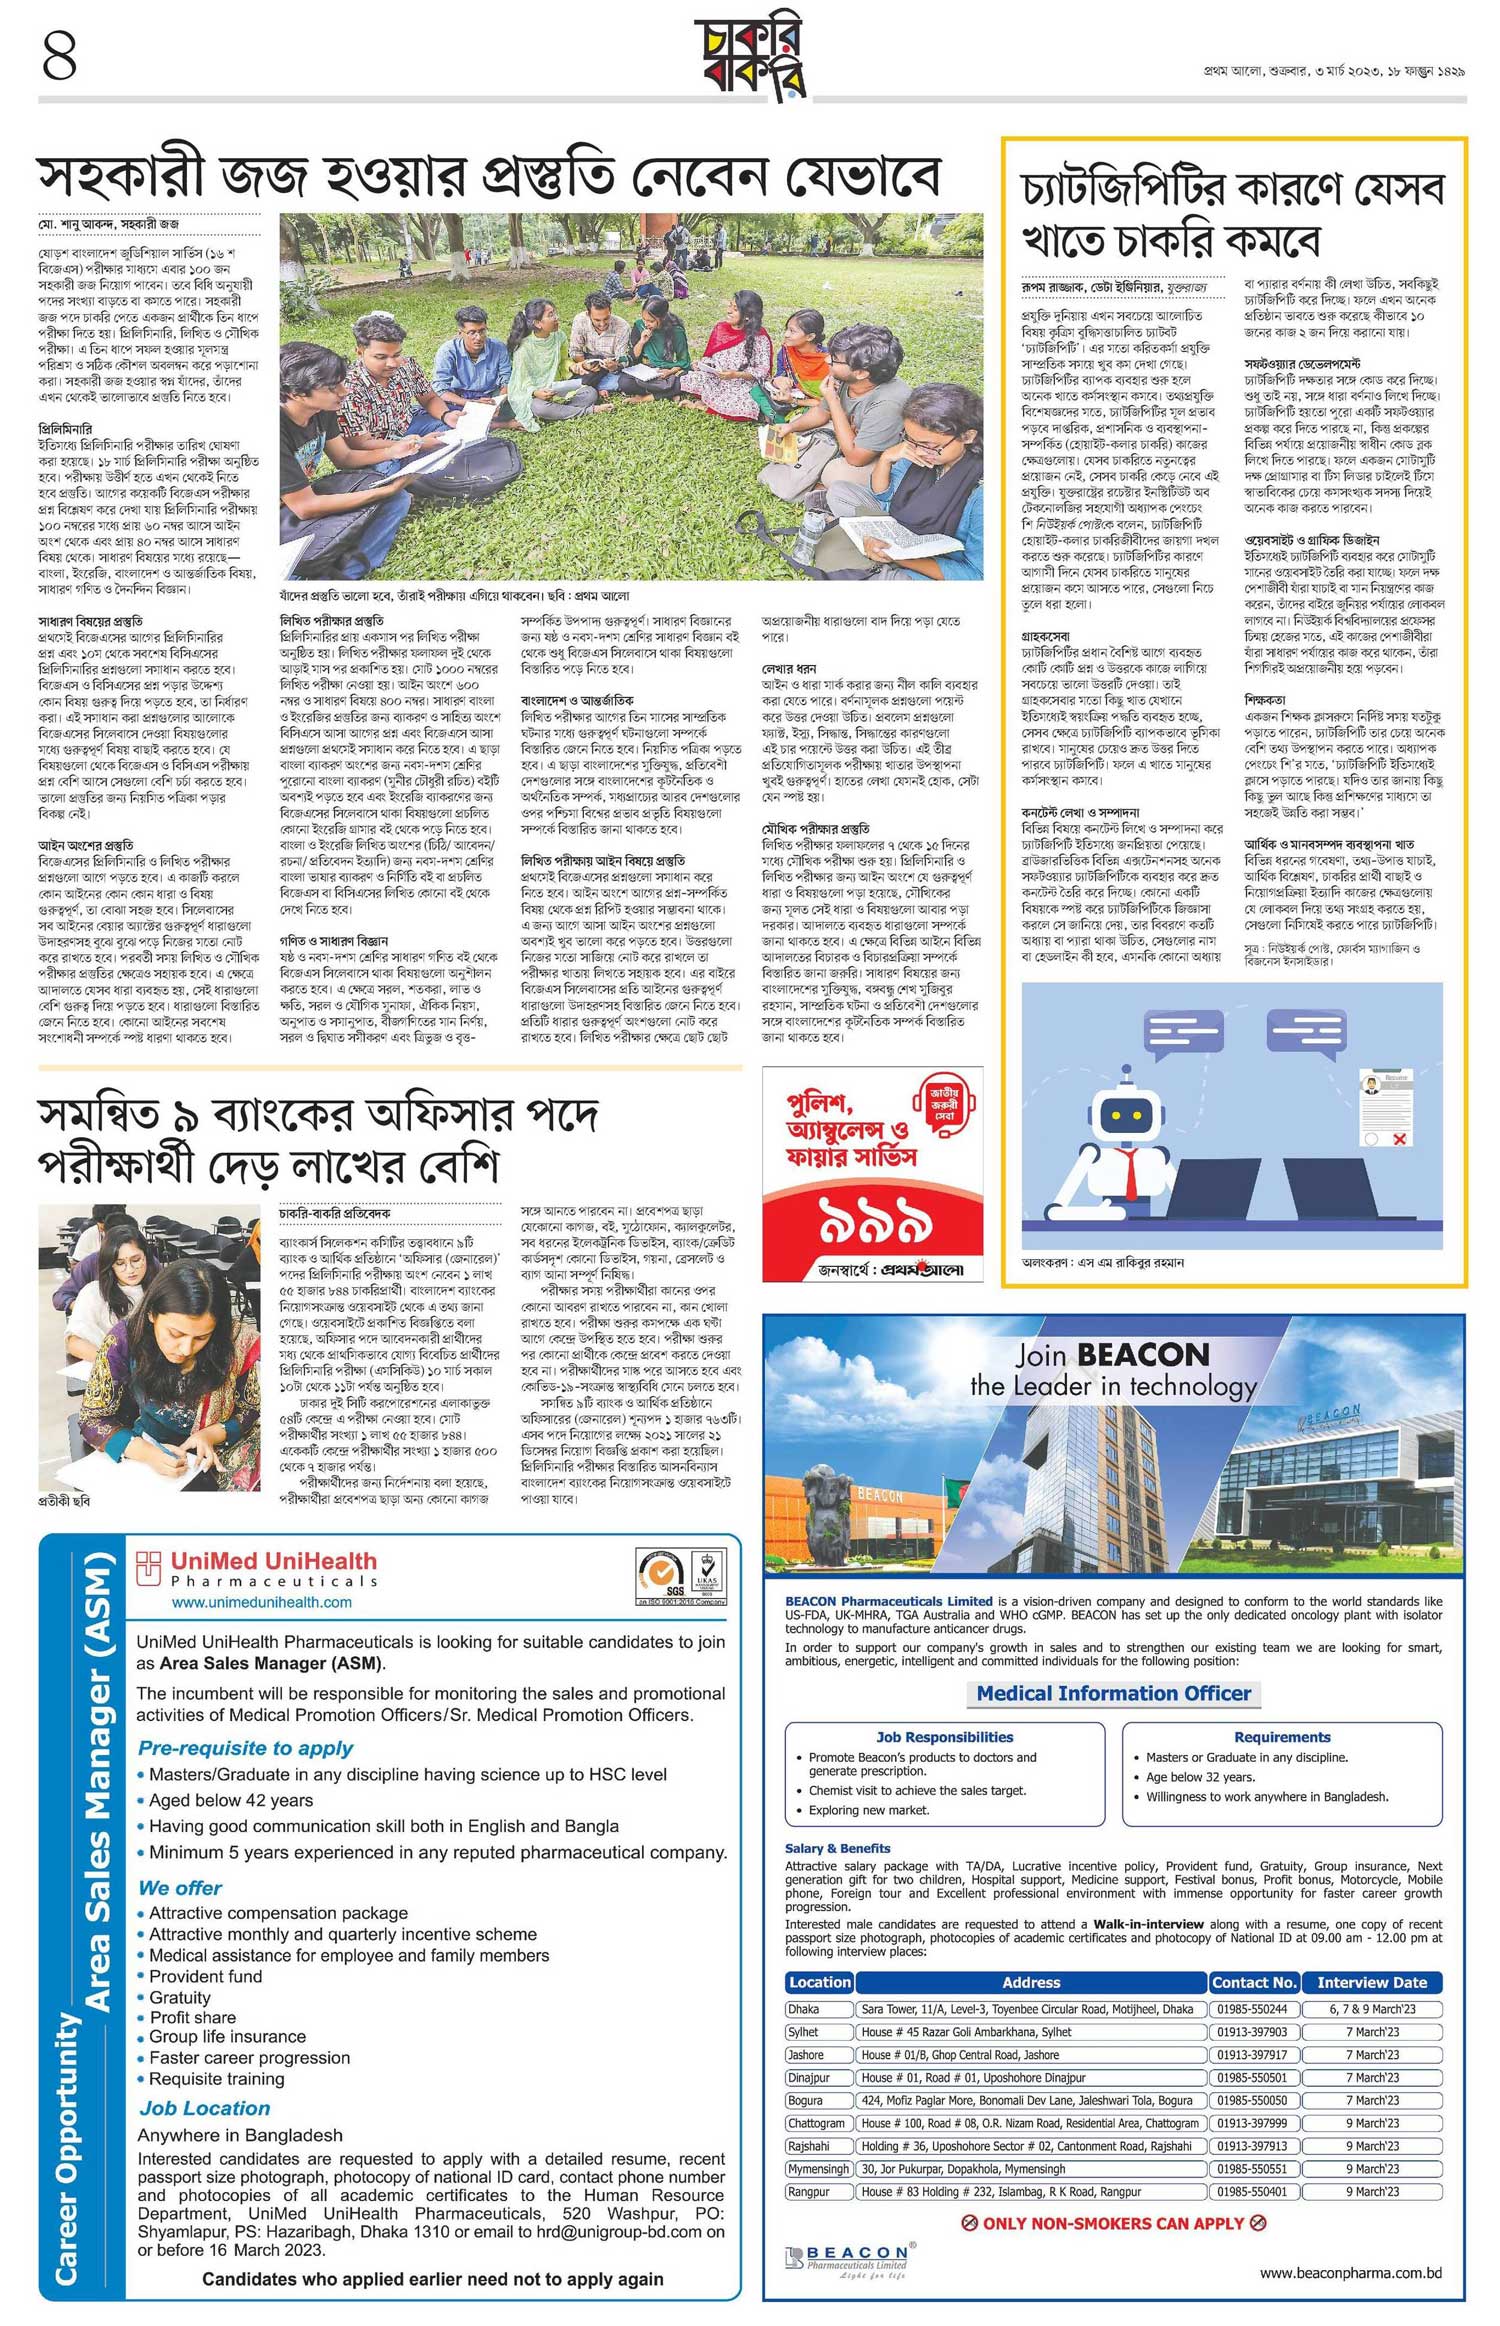 Prothom Alo Chakrir Khobor Chakri Bakri 03 MARCH 2023 - প্রথম আলো চাকরির খবর চাকরি বাকরি ০৩ মার্চ ২০২৩ - প্রথম আলো চাকরির খবর ০৩-০৩-২০২৩ - Prothom Alo Job circular 2023 - প্রথম আলো চাকরির খবর 2023 - prothom alo chakri bakri 2023-2024 - চাকরি বাকরি ২০২৩-২০২৪ - চাকরি বাকরি প্রথম আলো 2023